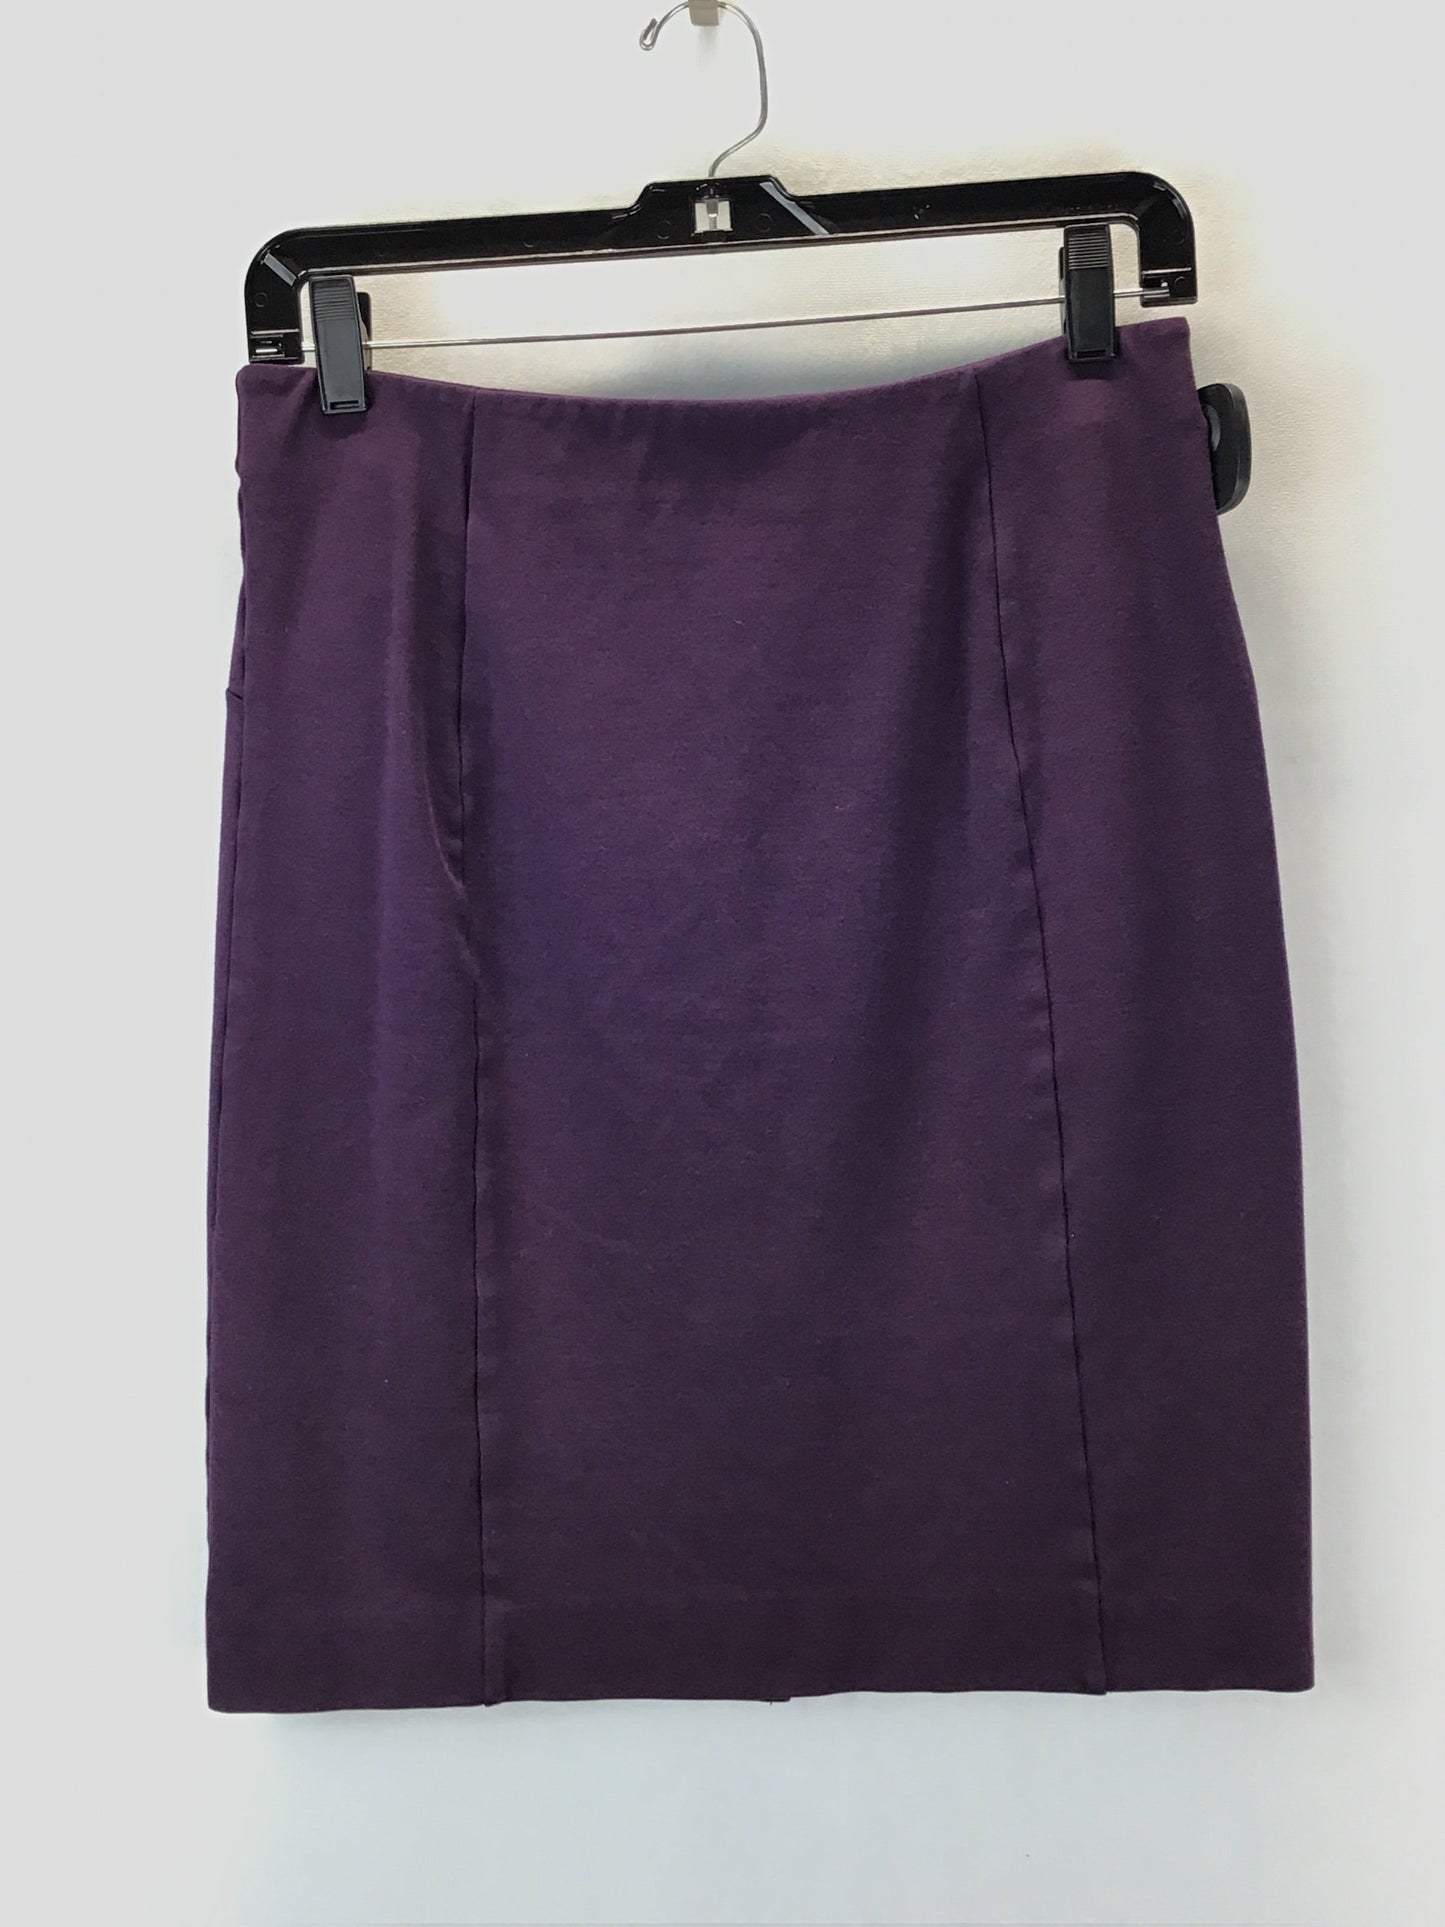 Skirt Mini & Short By Ann Taylor  Size: 4petite